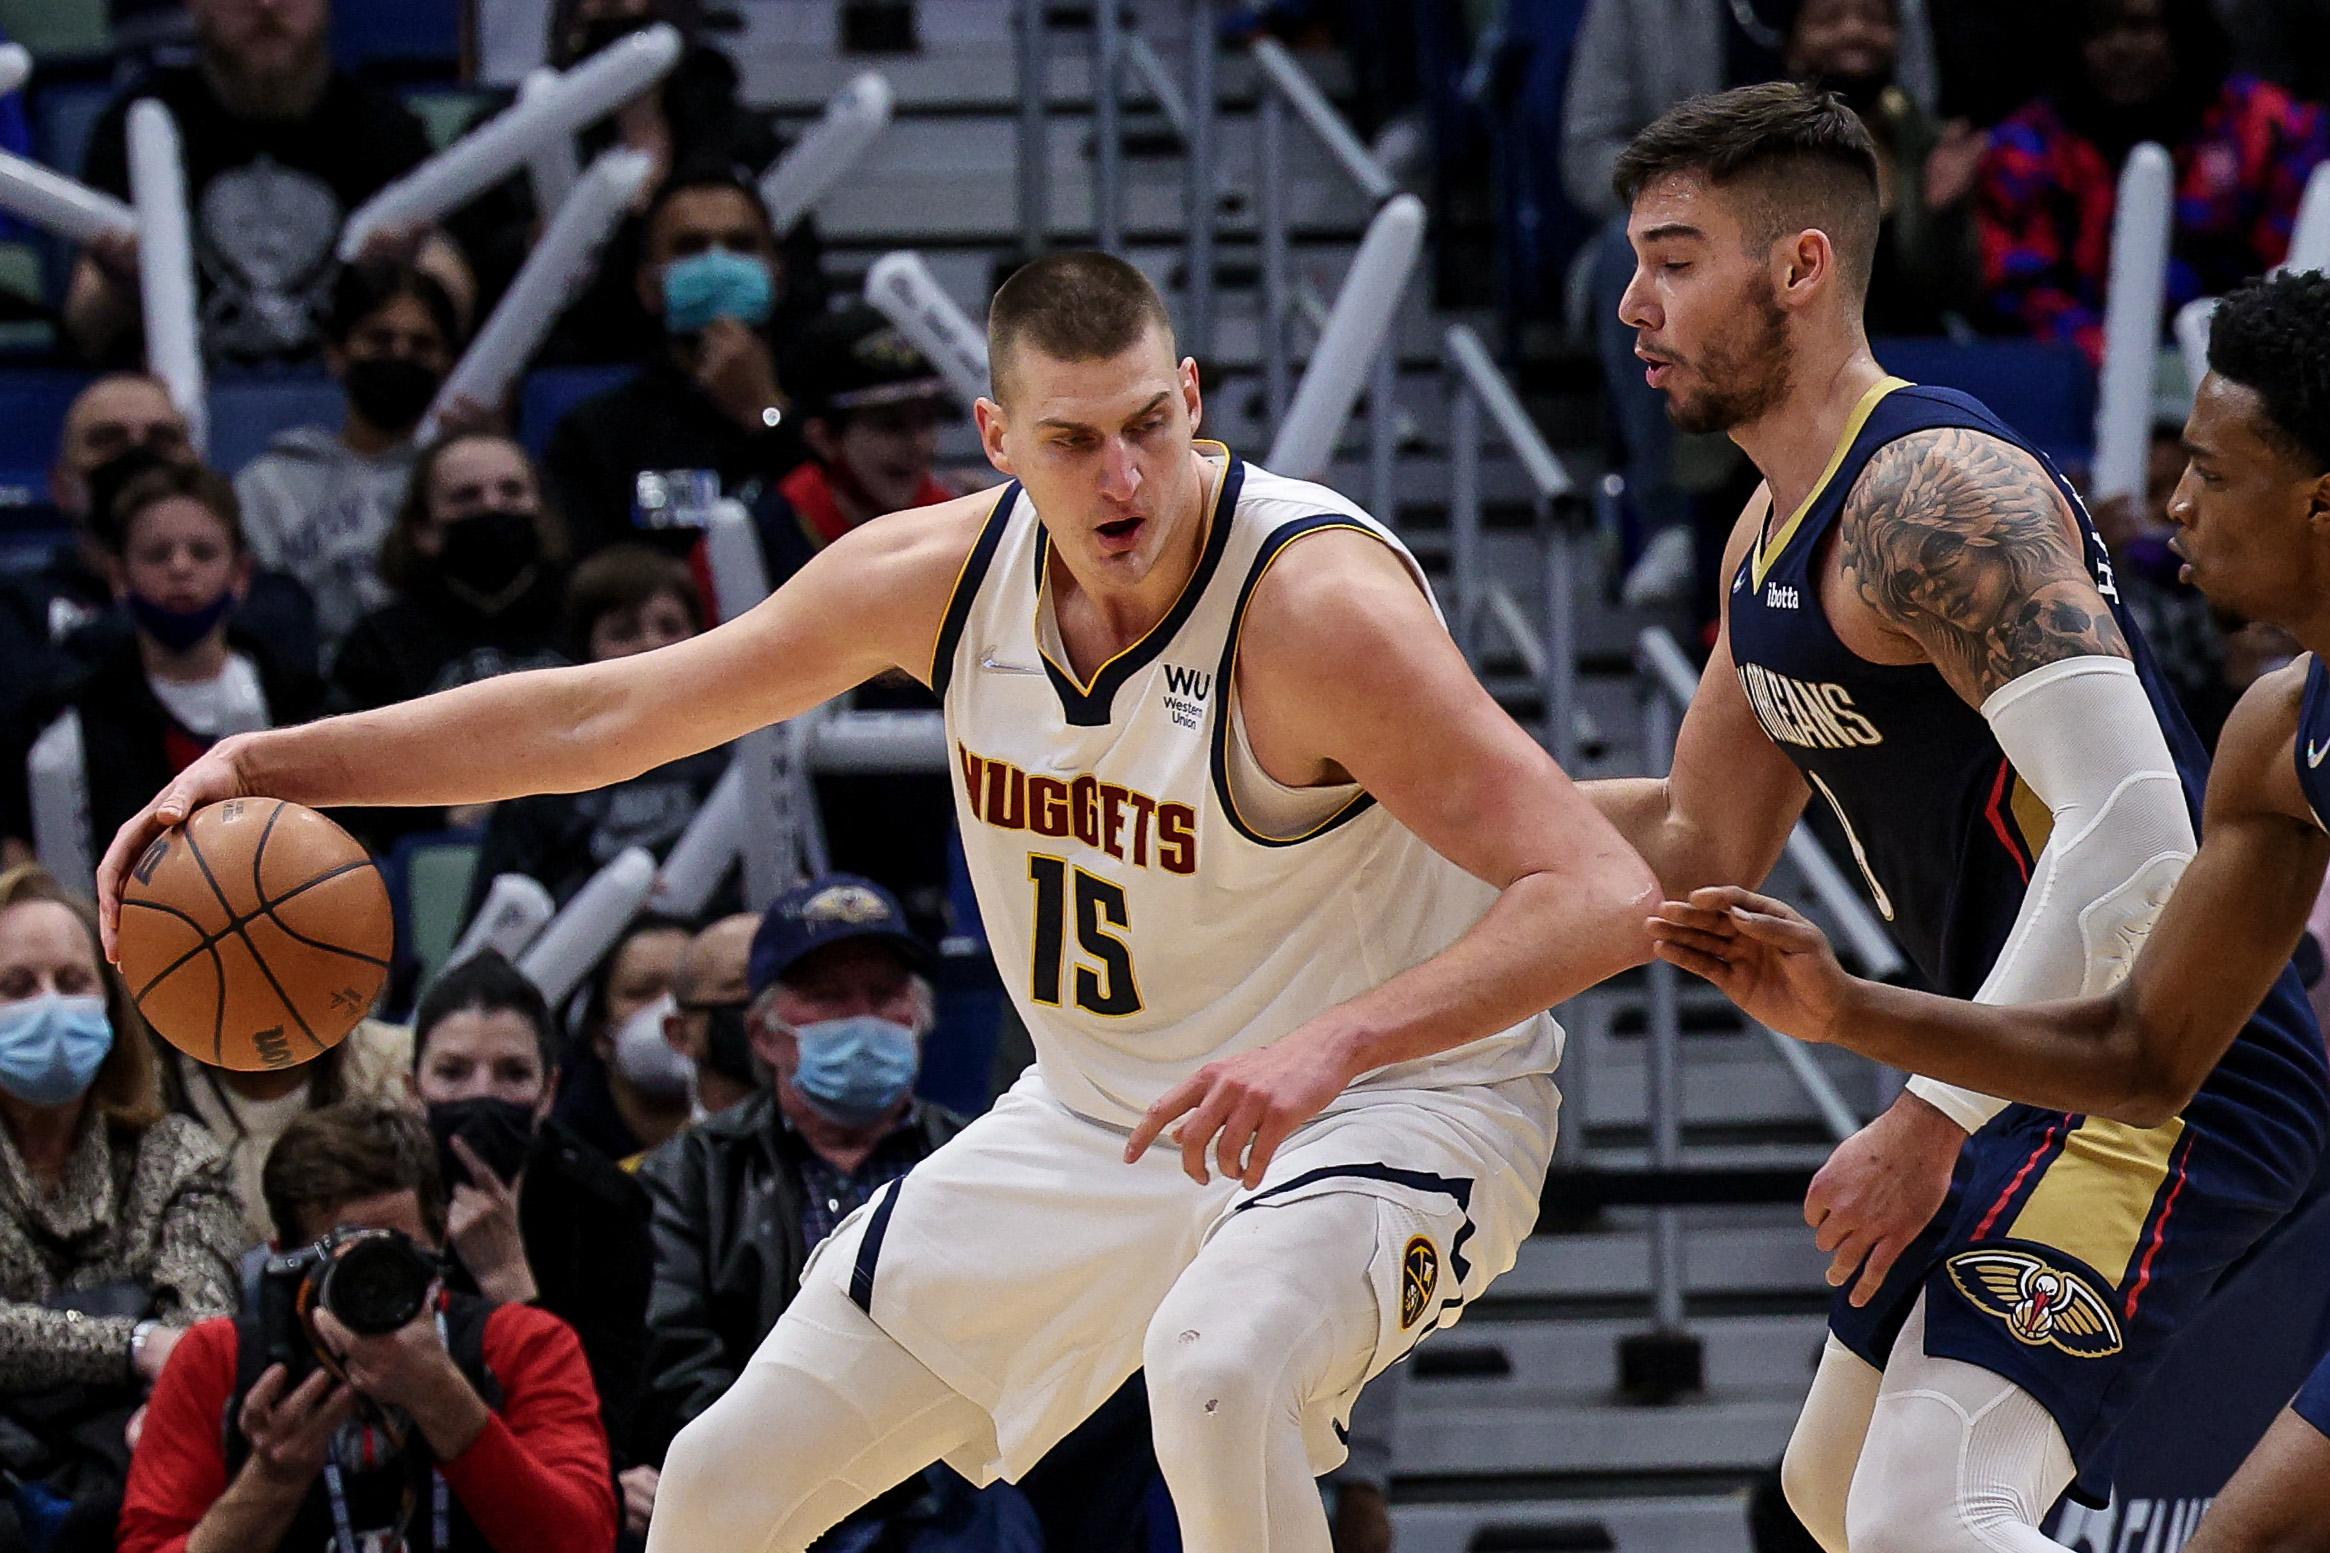 Nikola Jokic gets historic triple-double as Nuggets top Pelicans